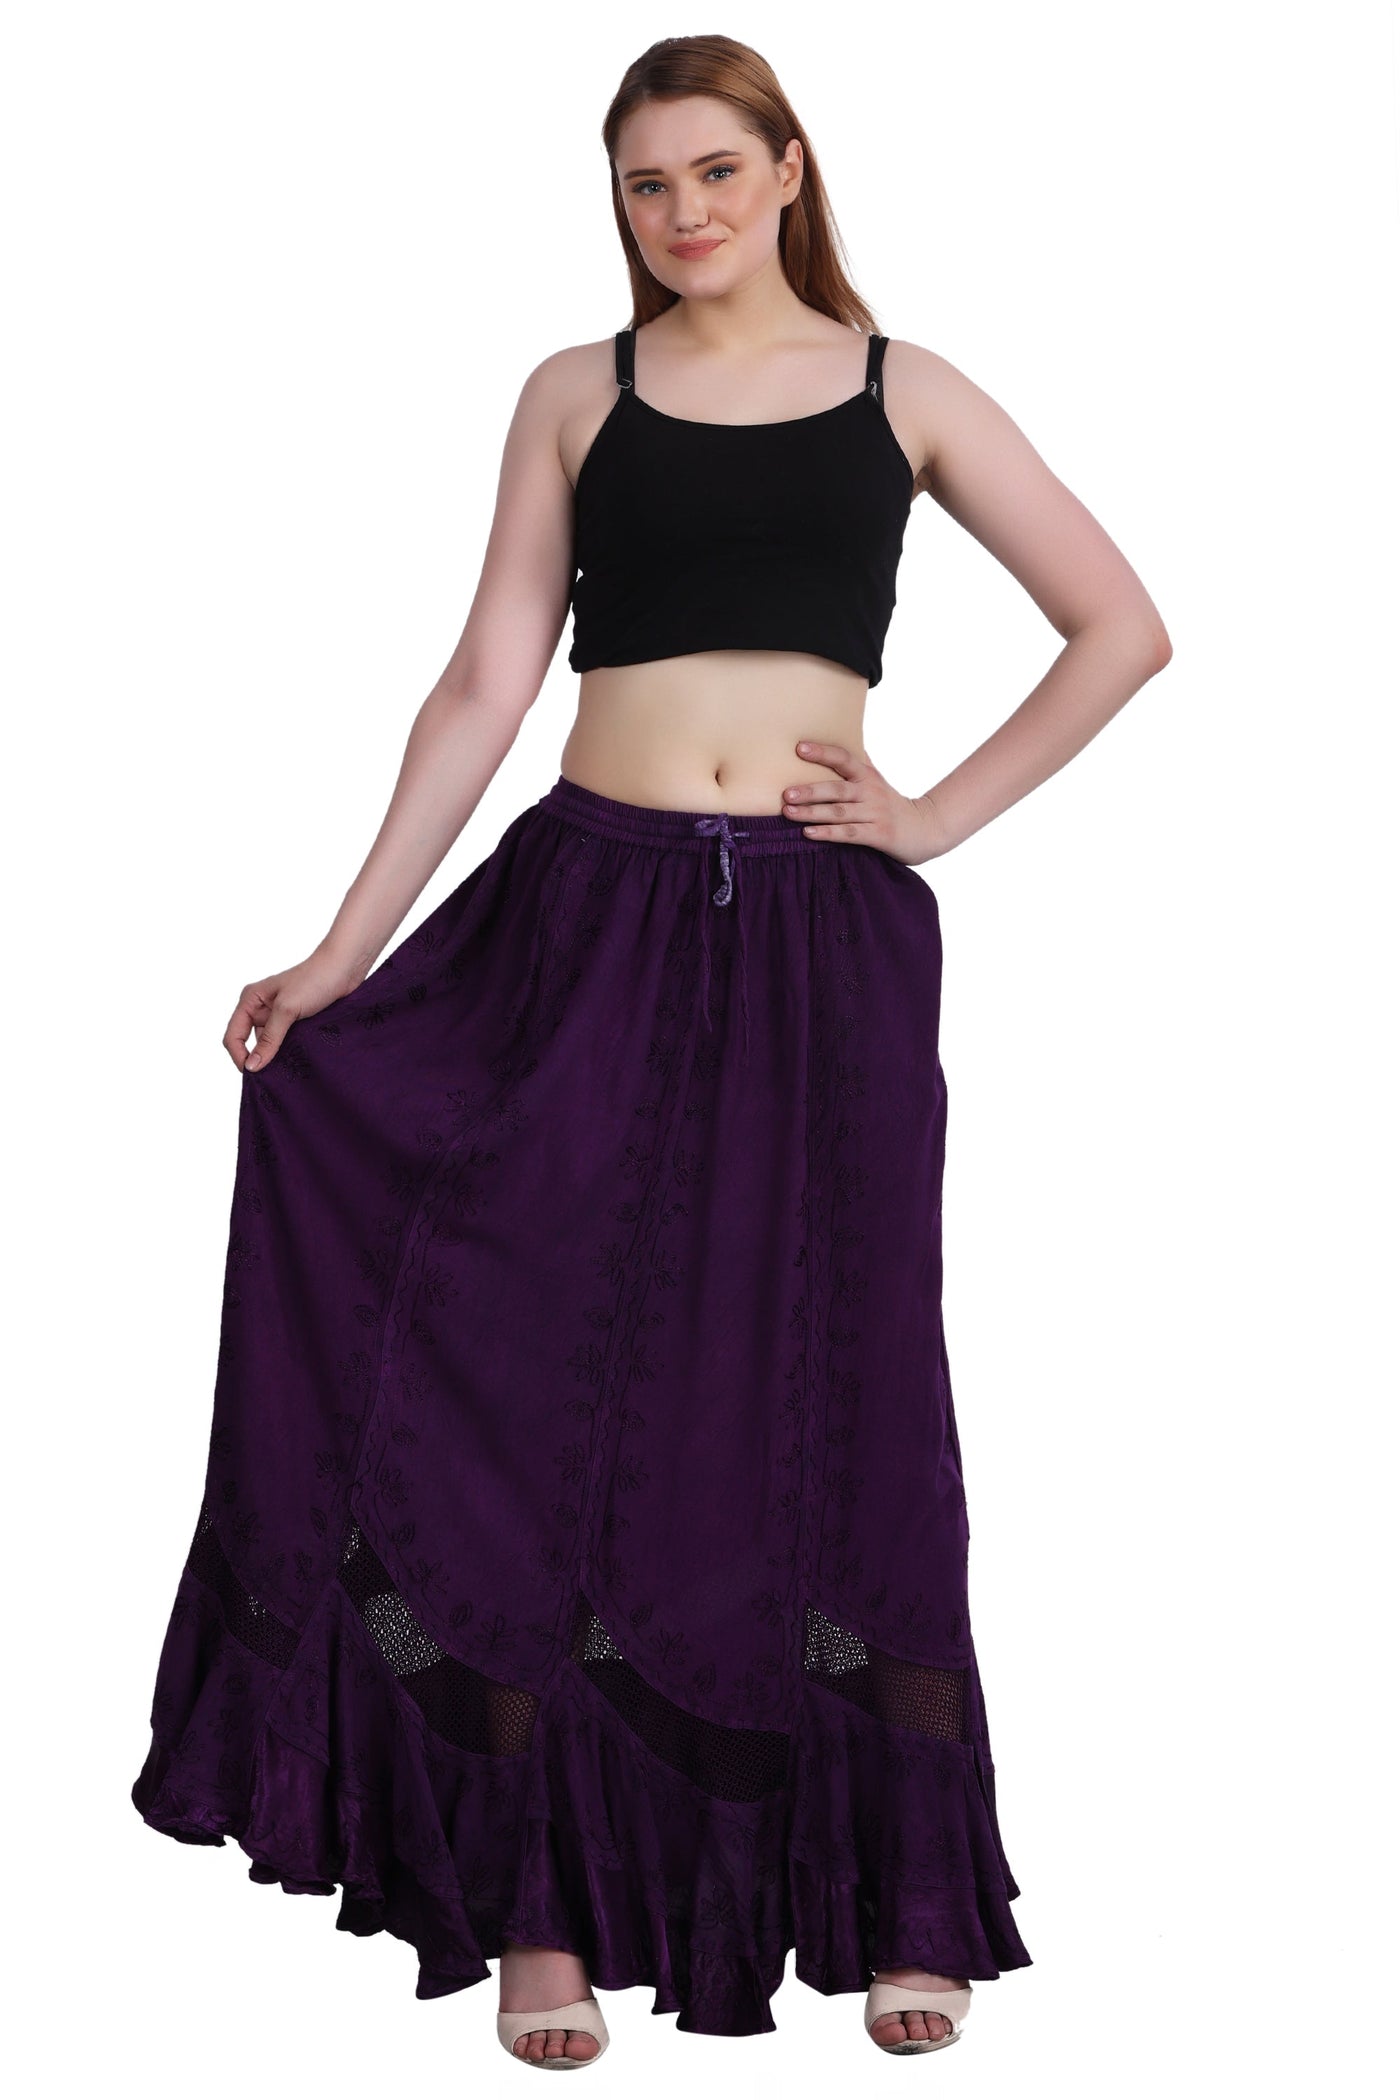 Acid Wash Skirt One Size 6 Colors 13225